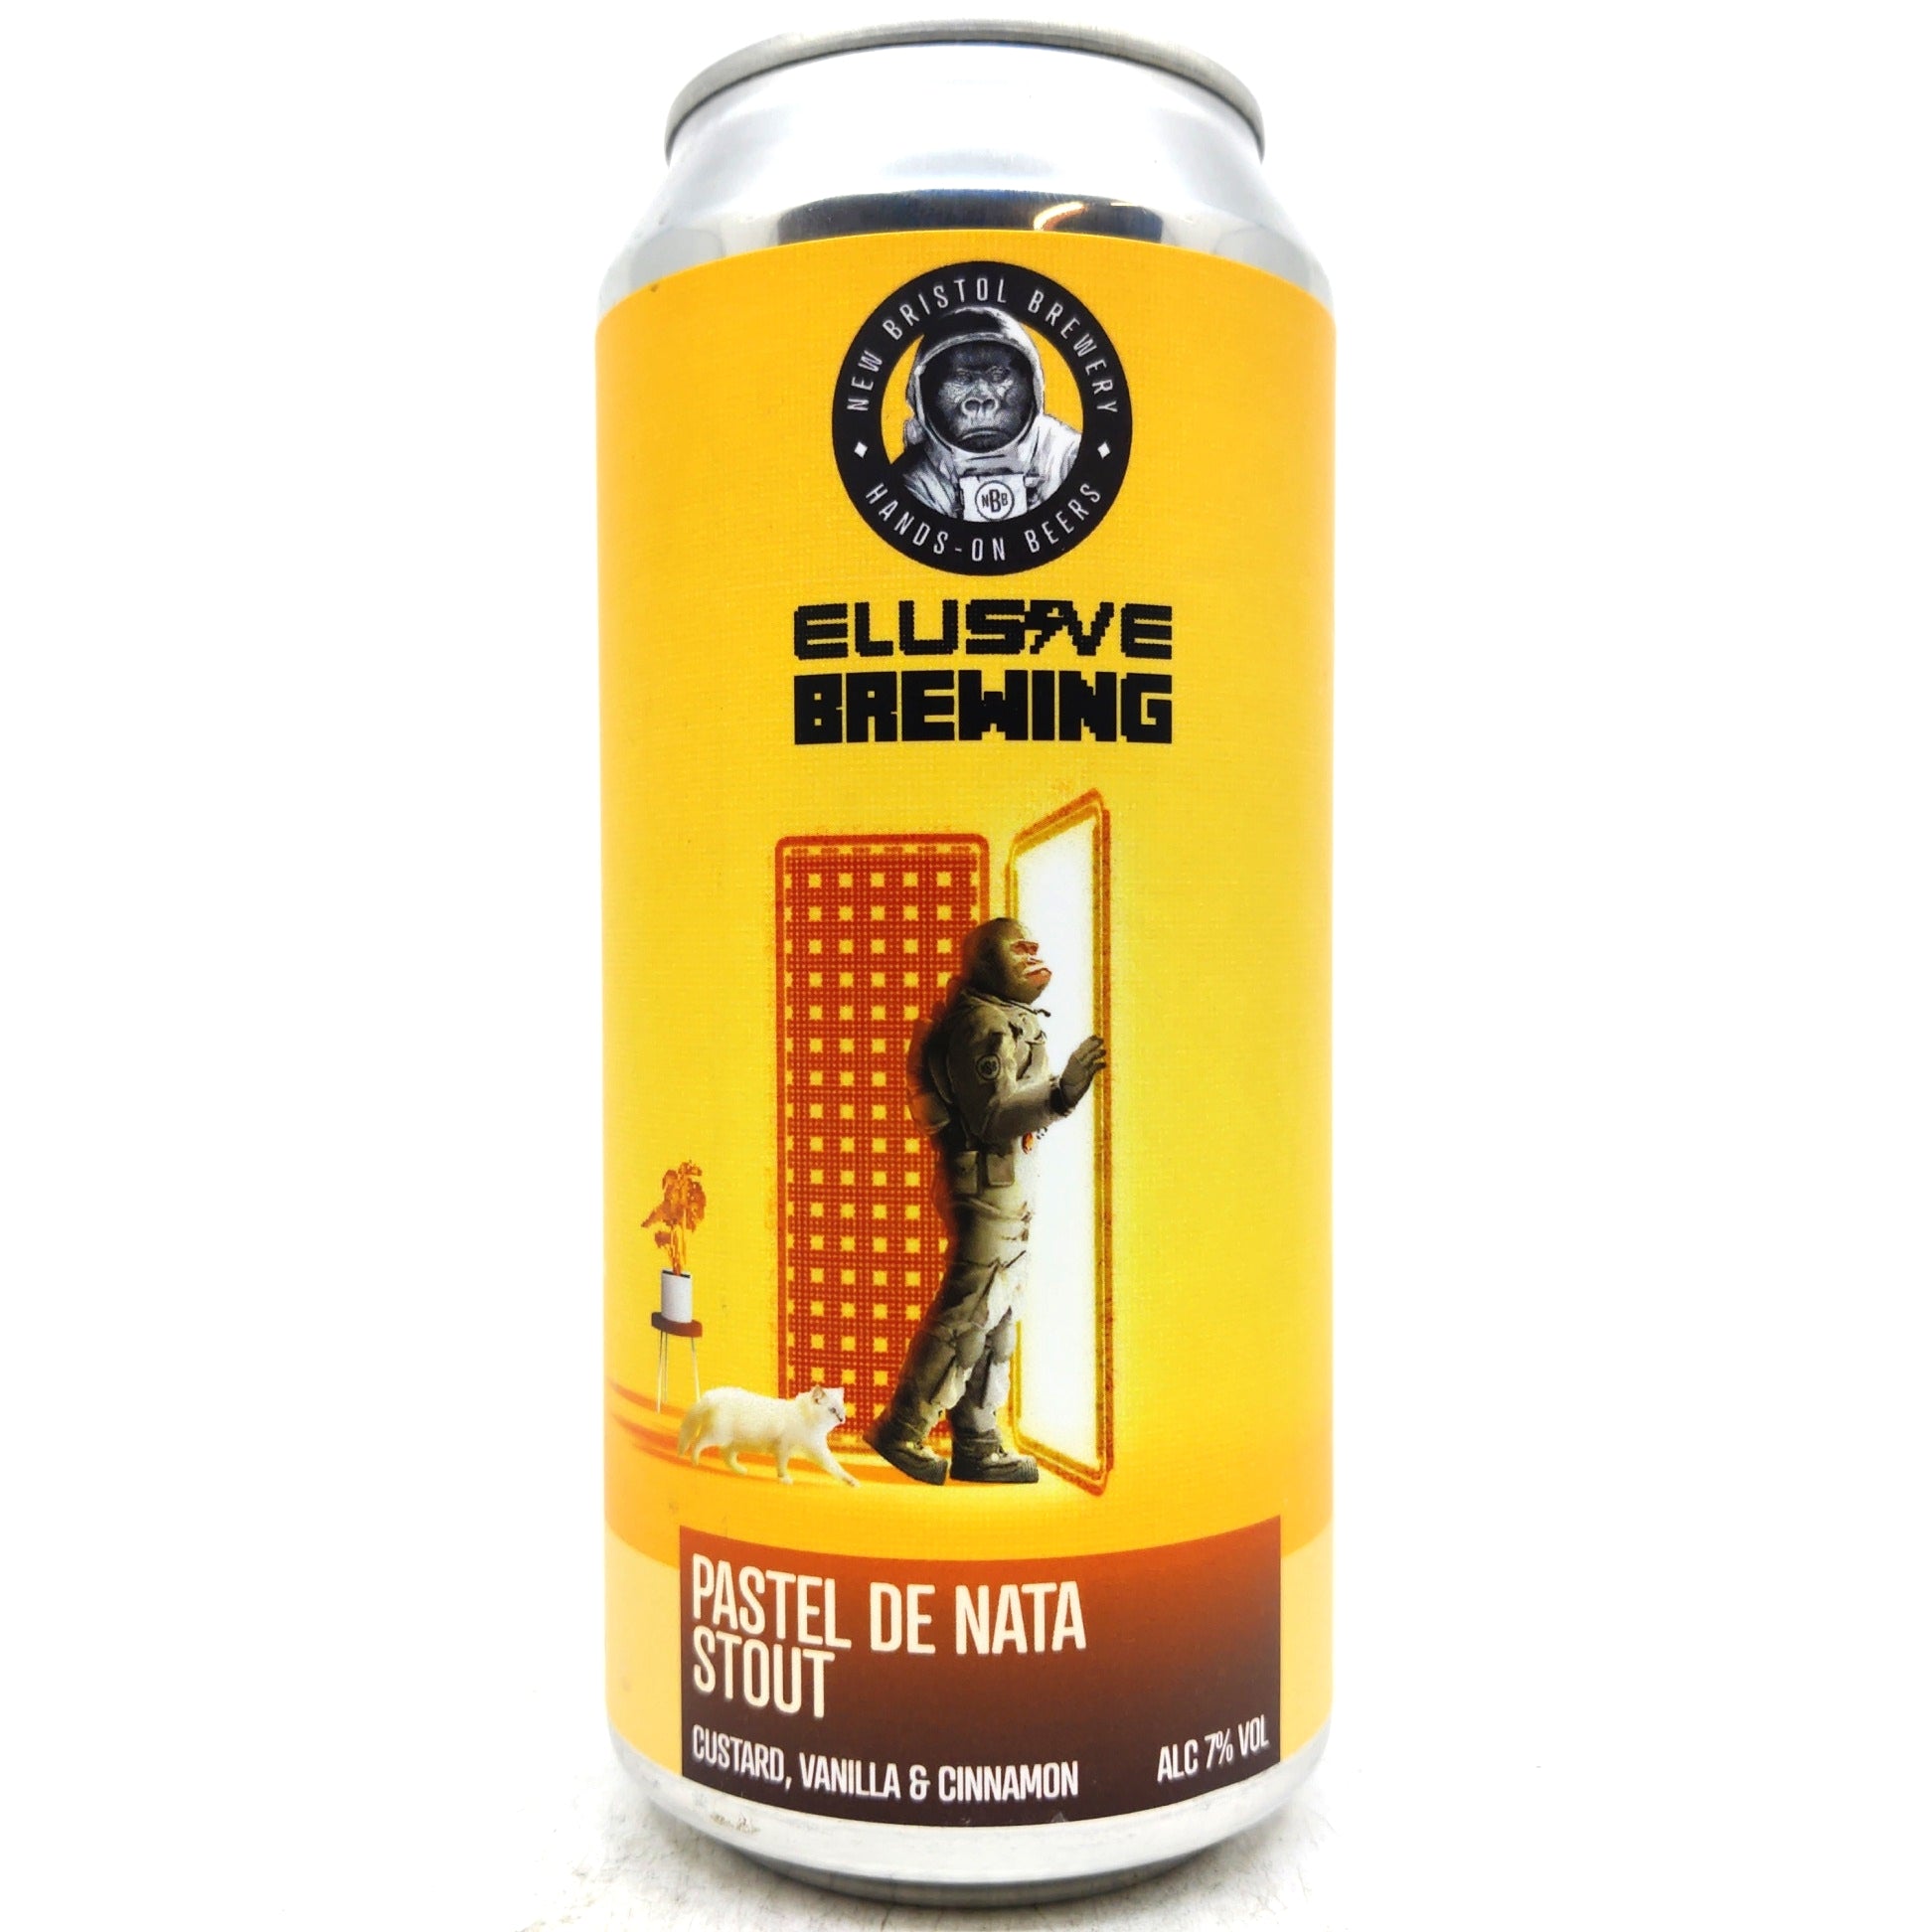 Elusive Brewing x New Bristol Pastel de Nata Stout 7% (440ml can)-Hop Burns & Black